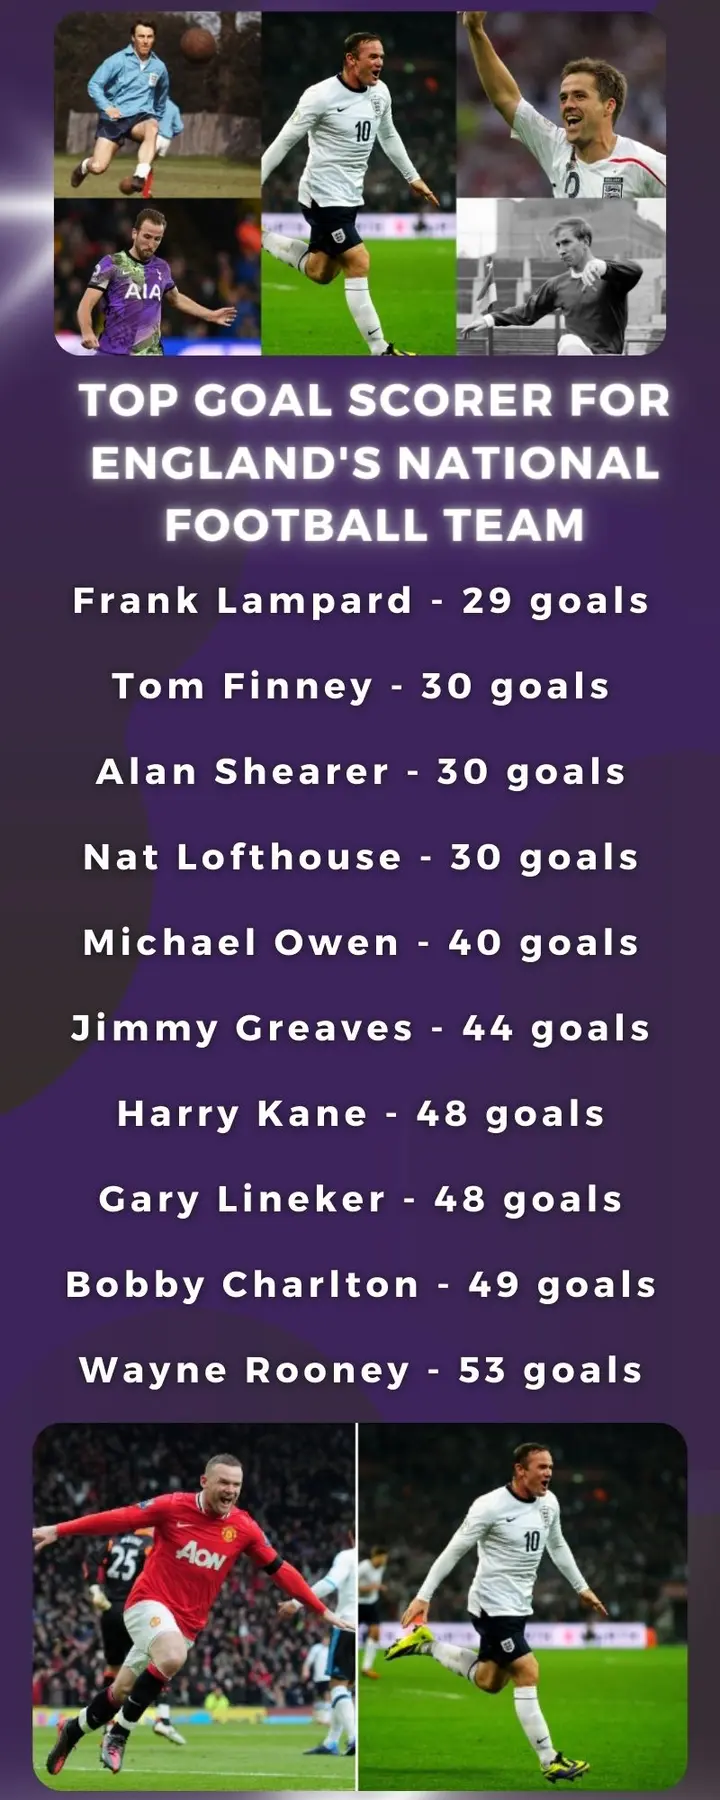 Top goal scorer for England's national football team